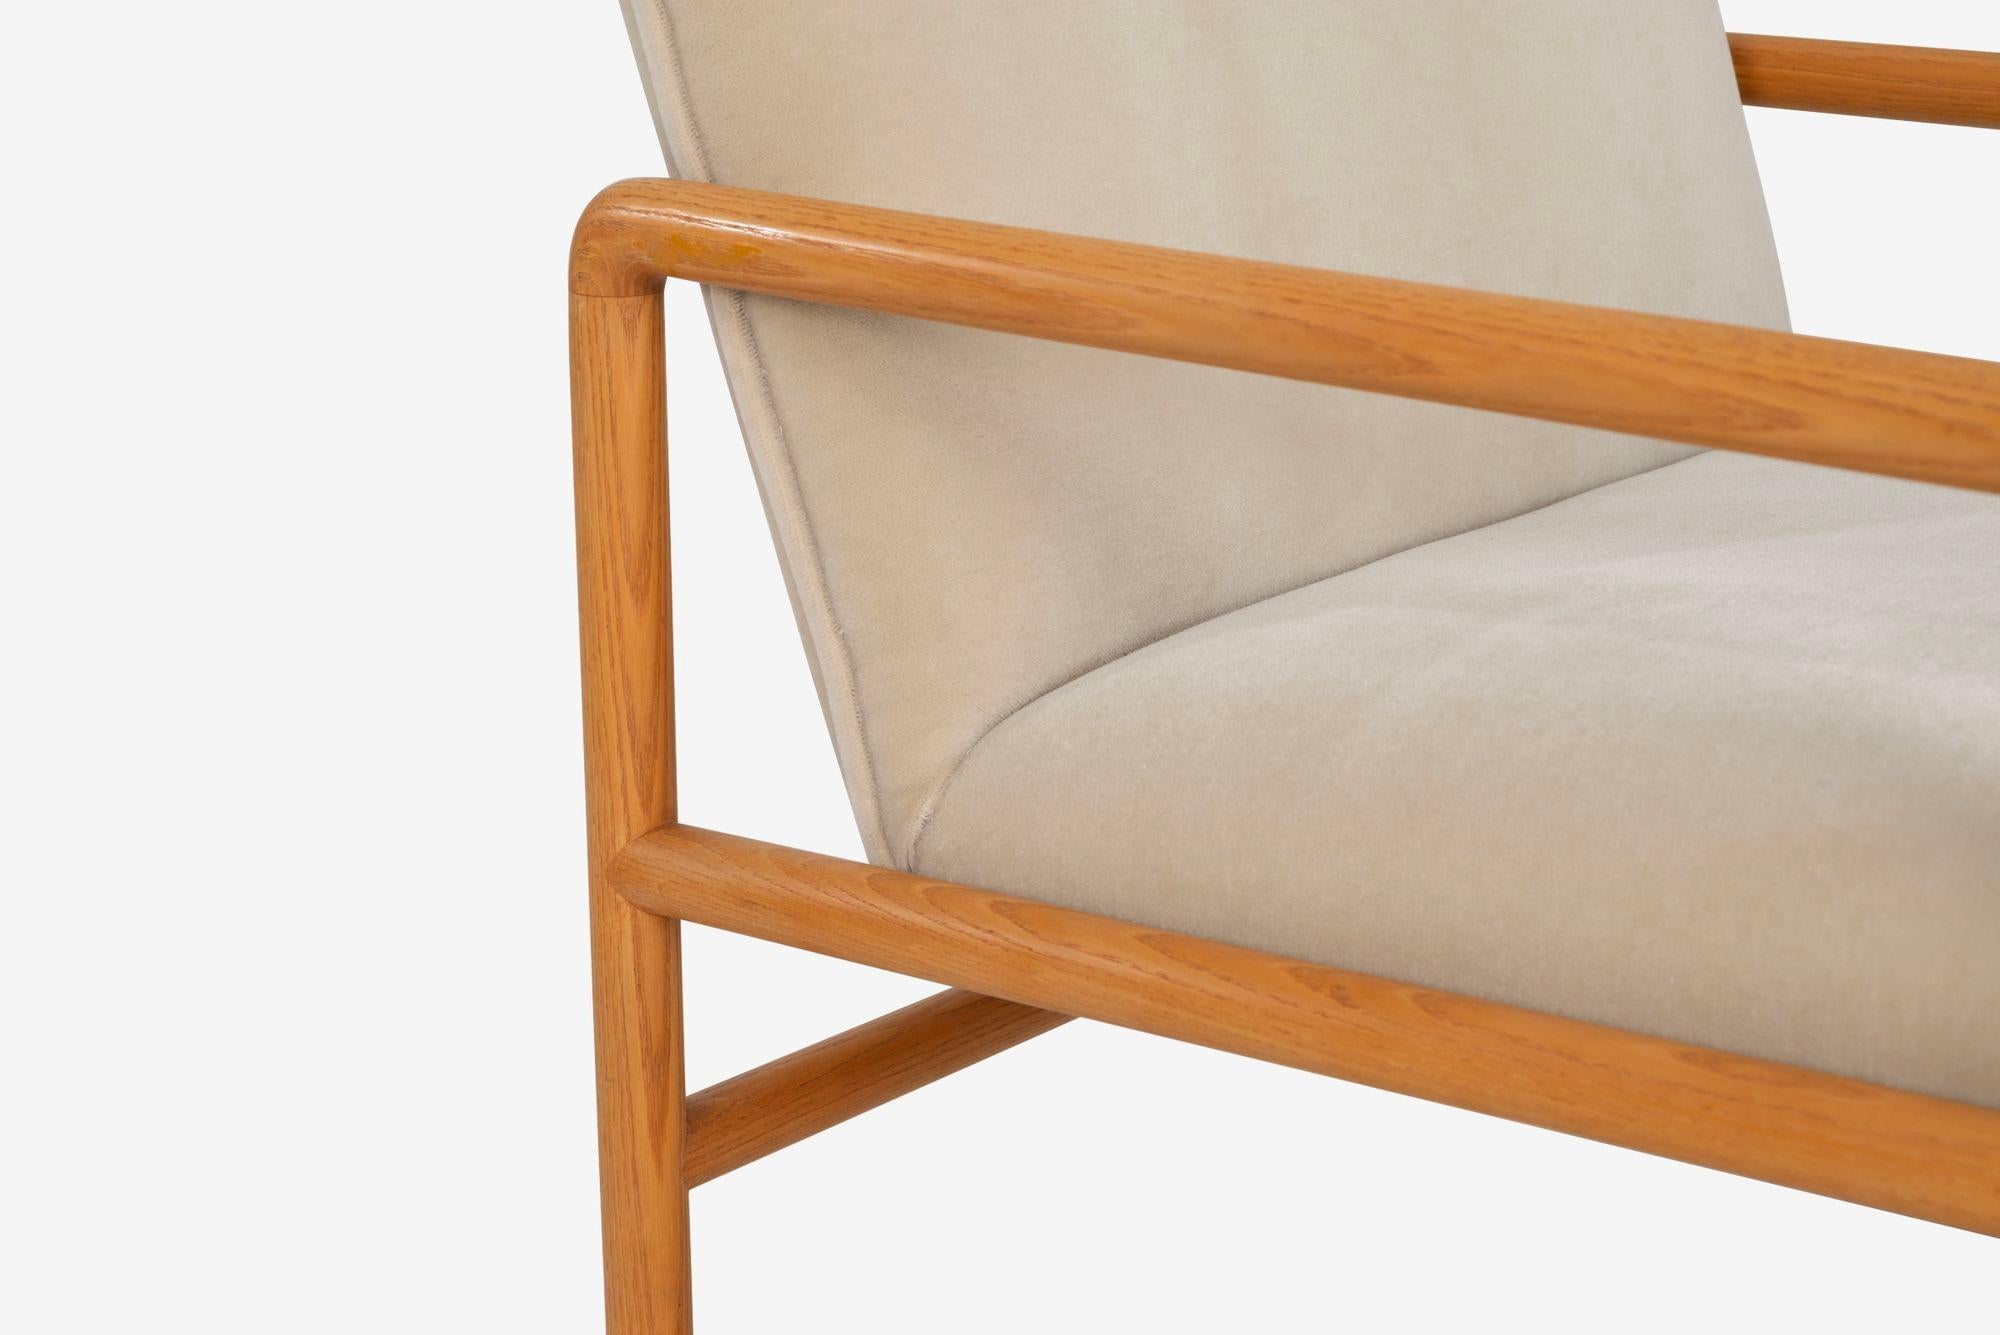 Ward Bennett Lounge Chairs in Solid Oak for Brickel Associates 1965c. For Sale 1